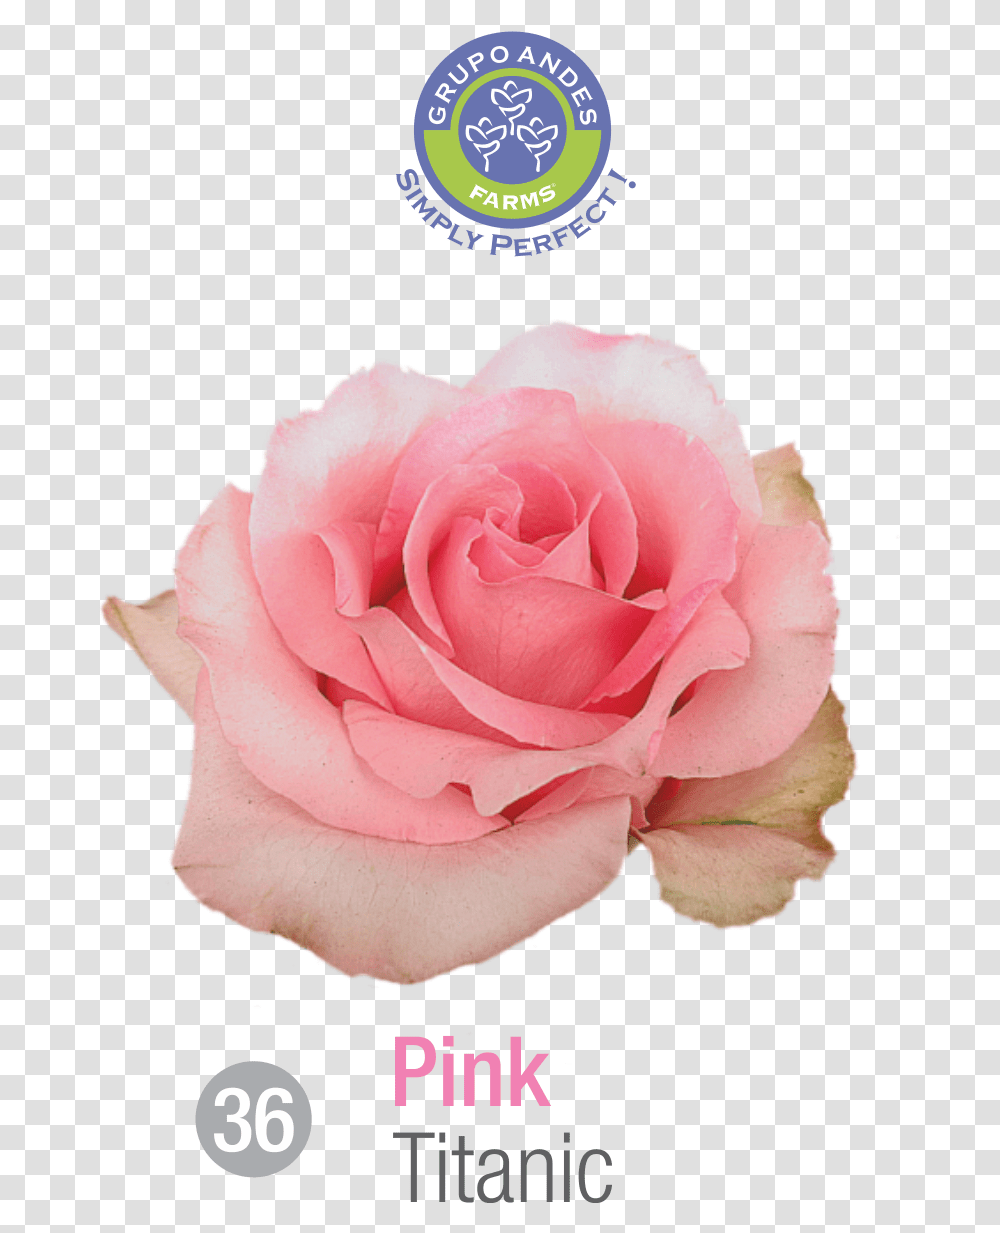 Premium Roses 2018 - Grupo Andes Titanic, Flower, Plant, Blossom, Petal Transparent Png